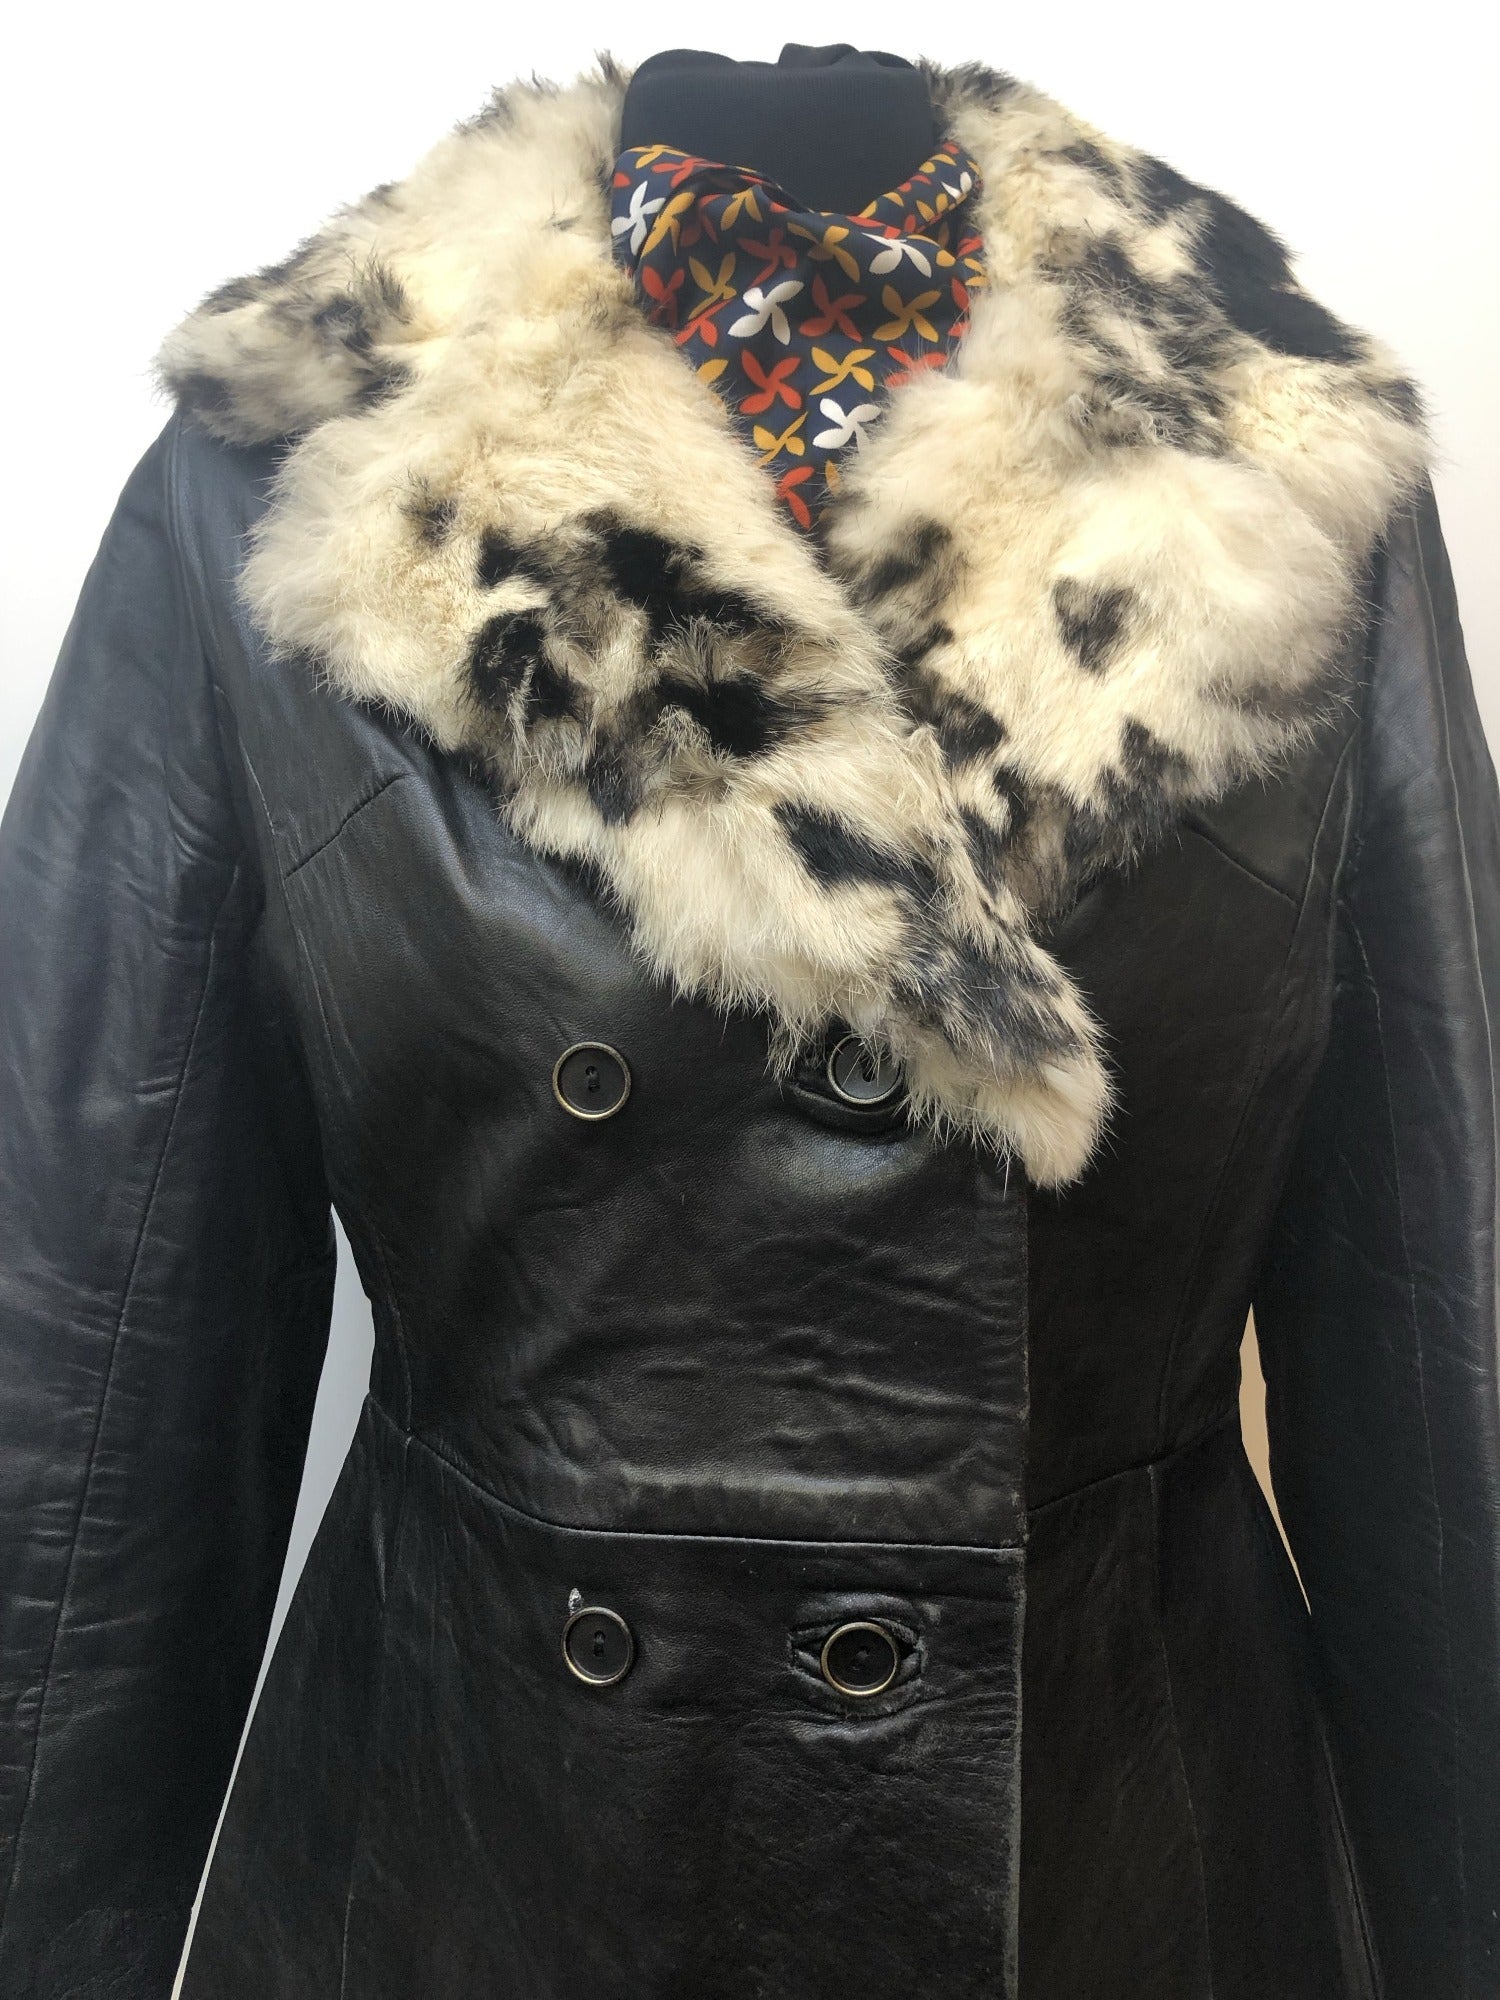 womens jacket  womens  vintage  Urban Village Vintage  rabbit  leather  fur collar  fitted  black  70s  1970s  10